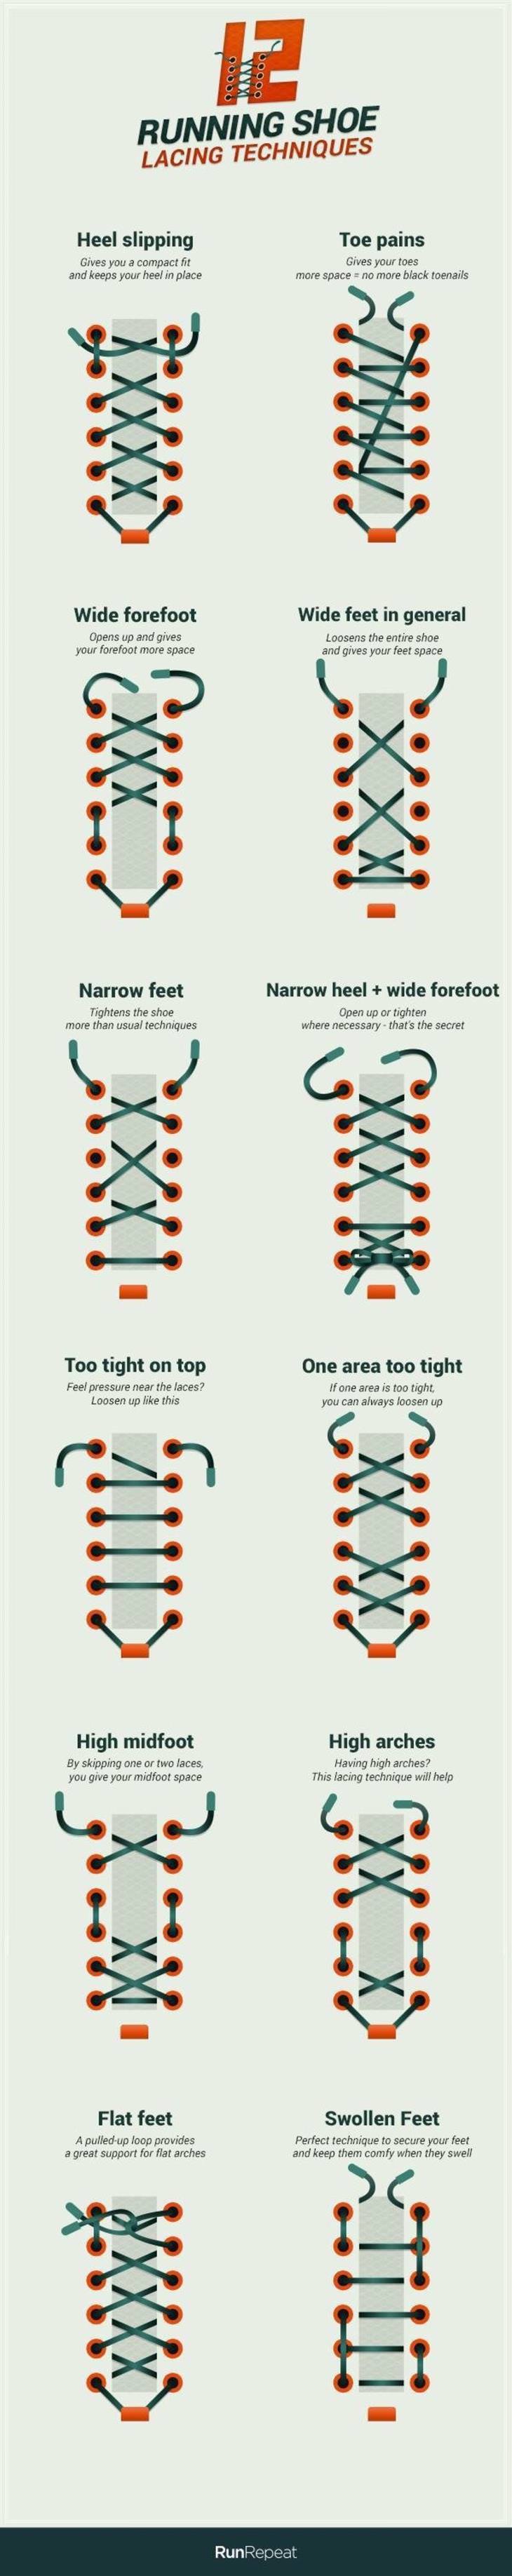 Cool Charts lacing techniques